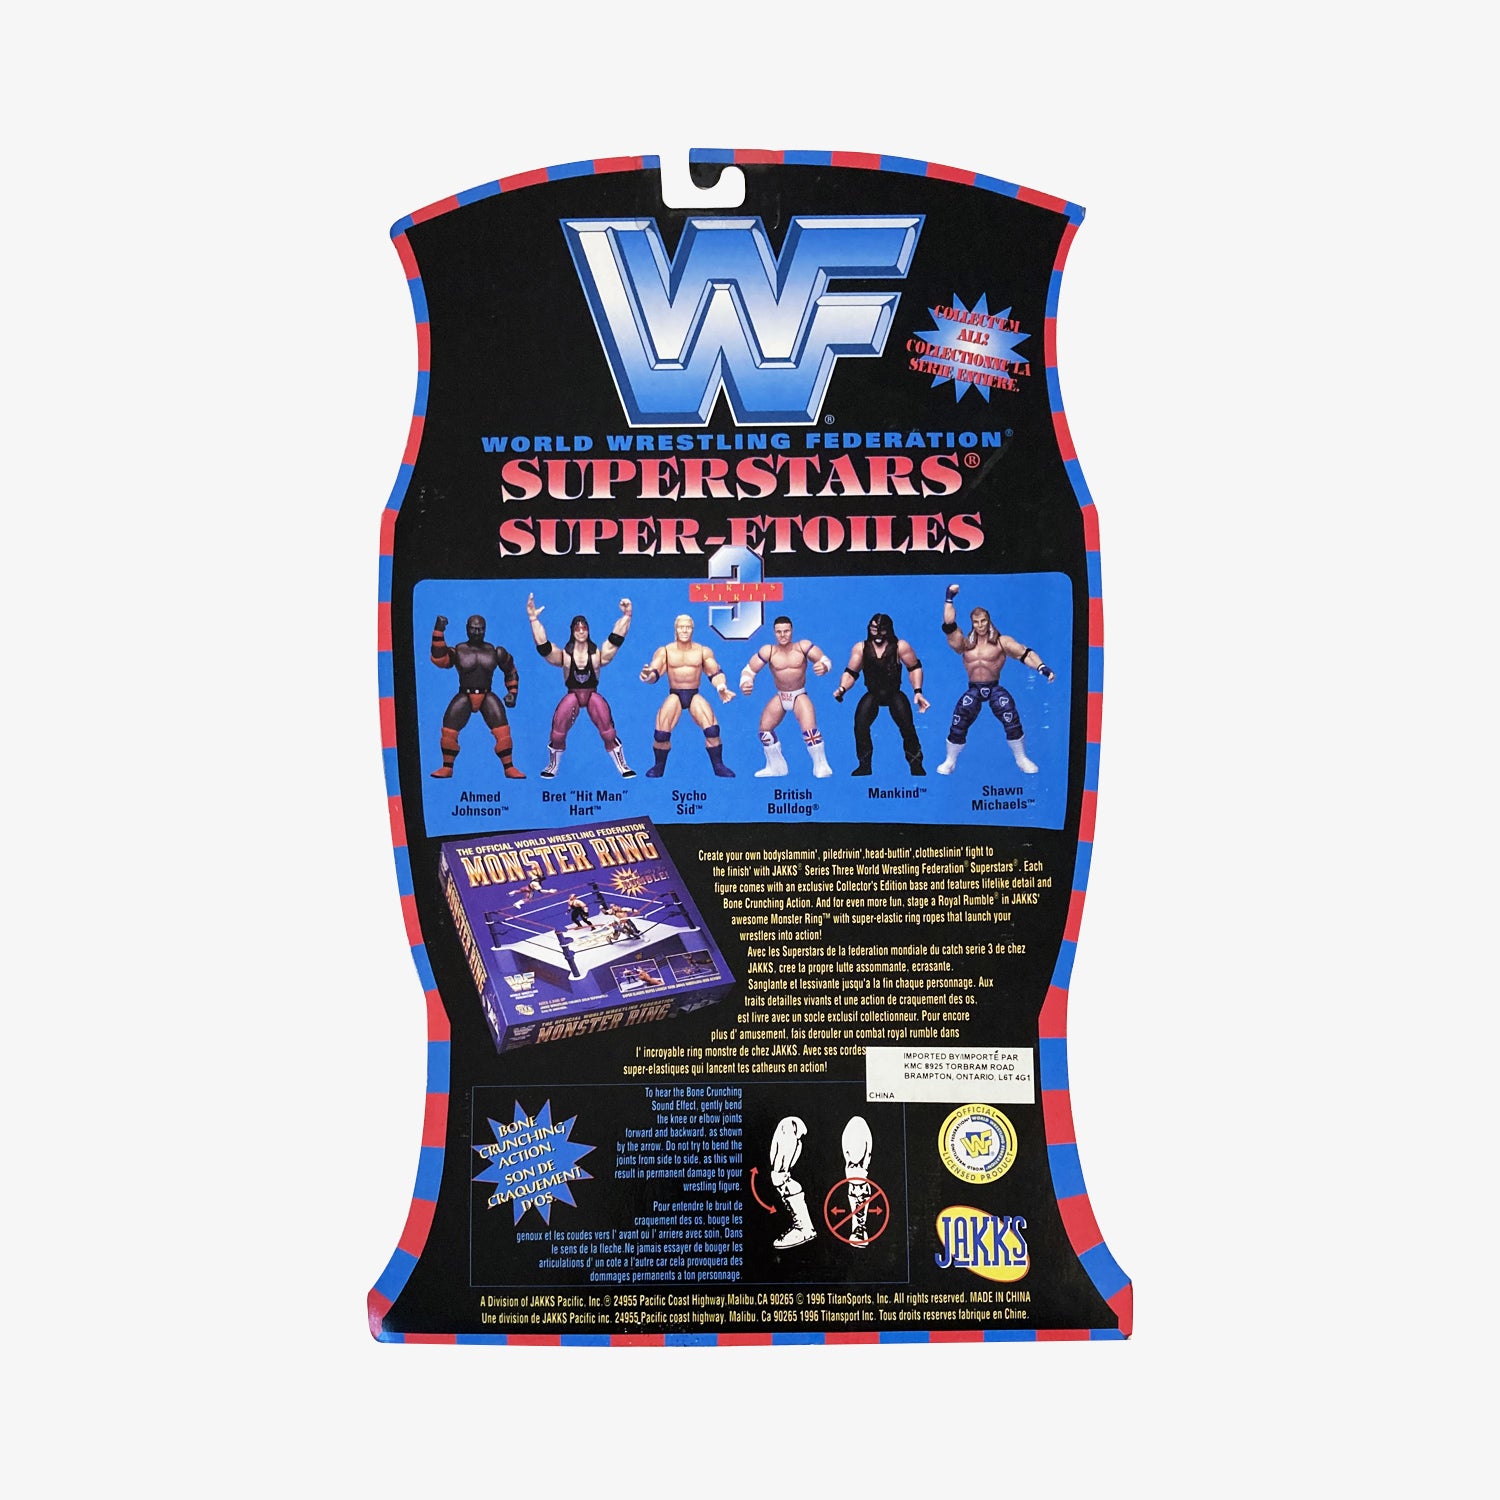 WWF Jakks Pacific Series 3 Shawn Michaels available at slamazon.ca